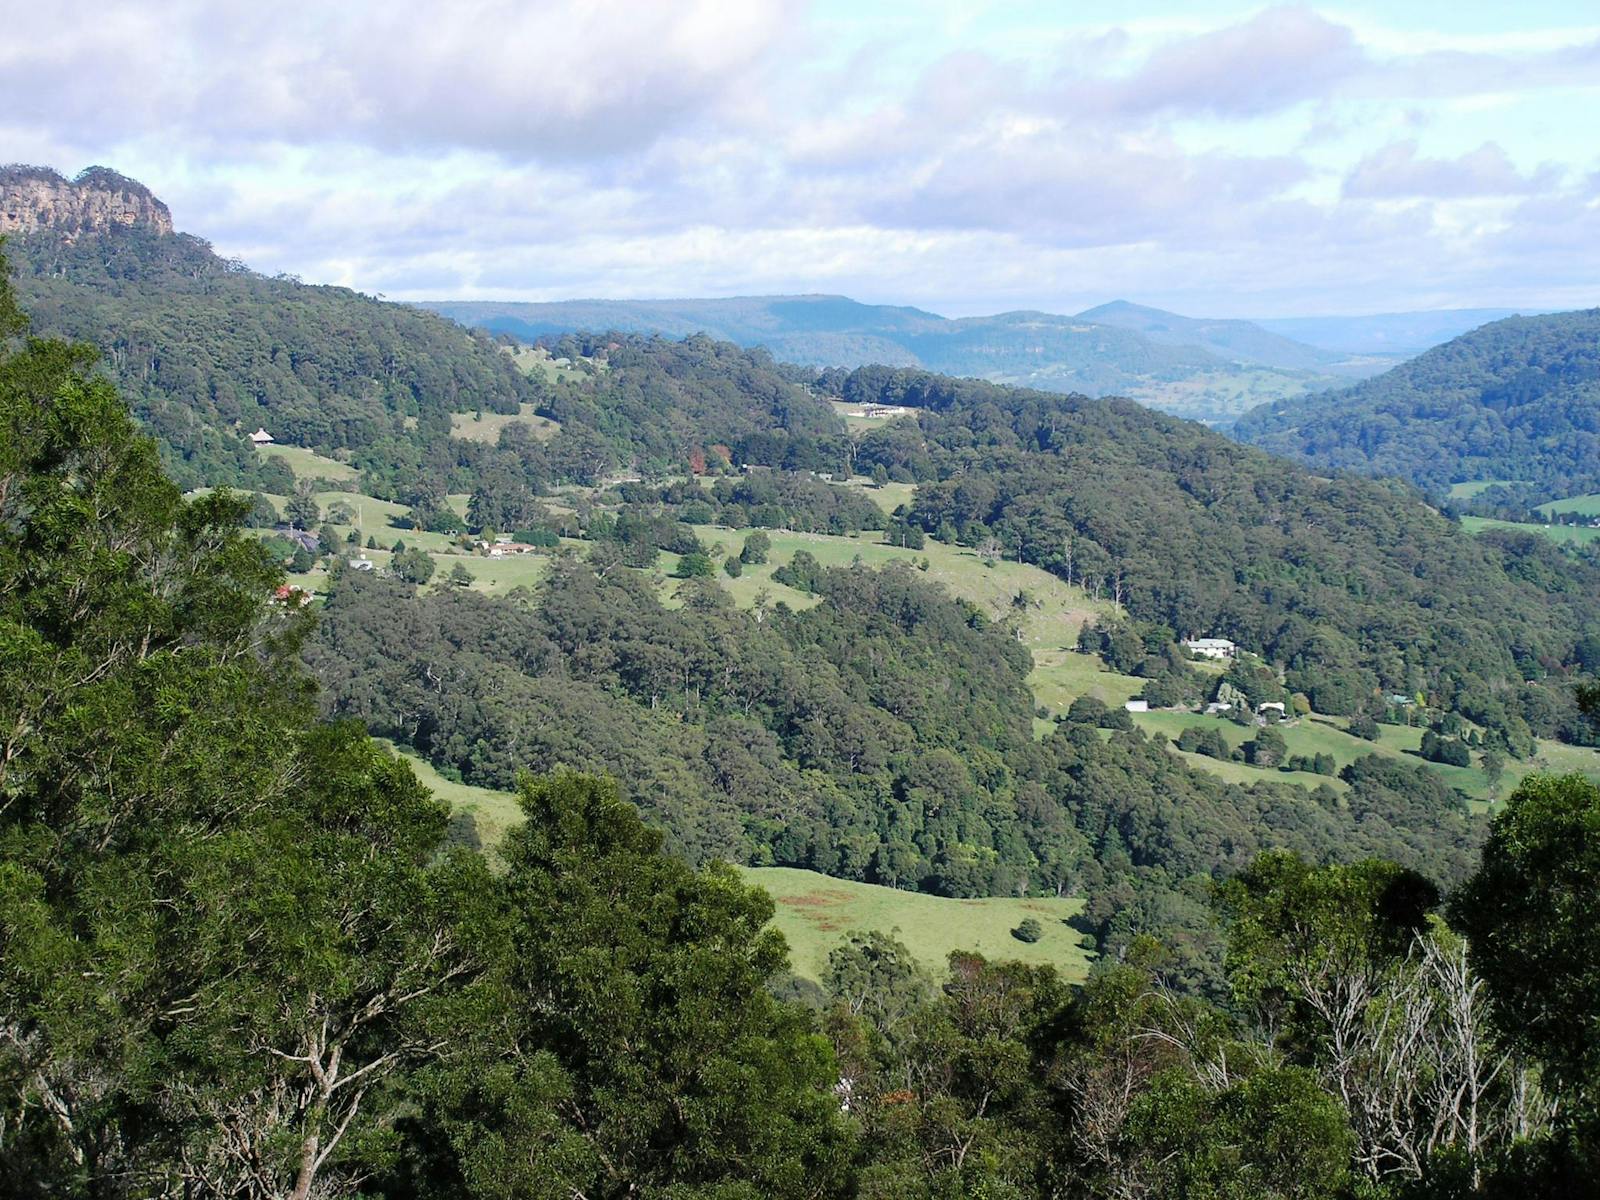 Woodhill looking towards Kangaroo Valley